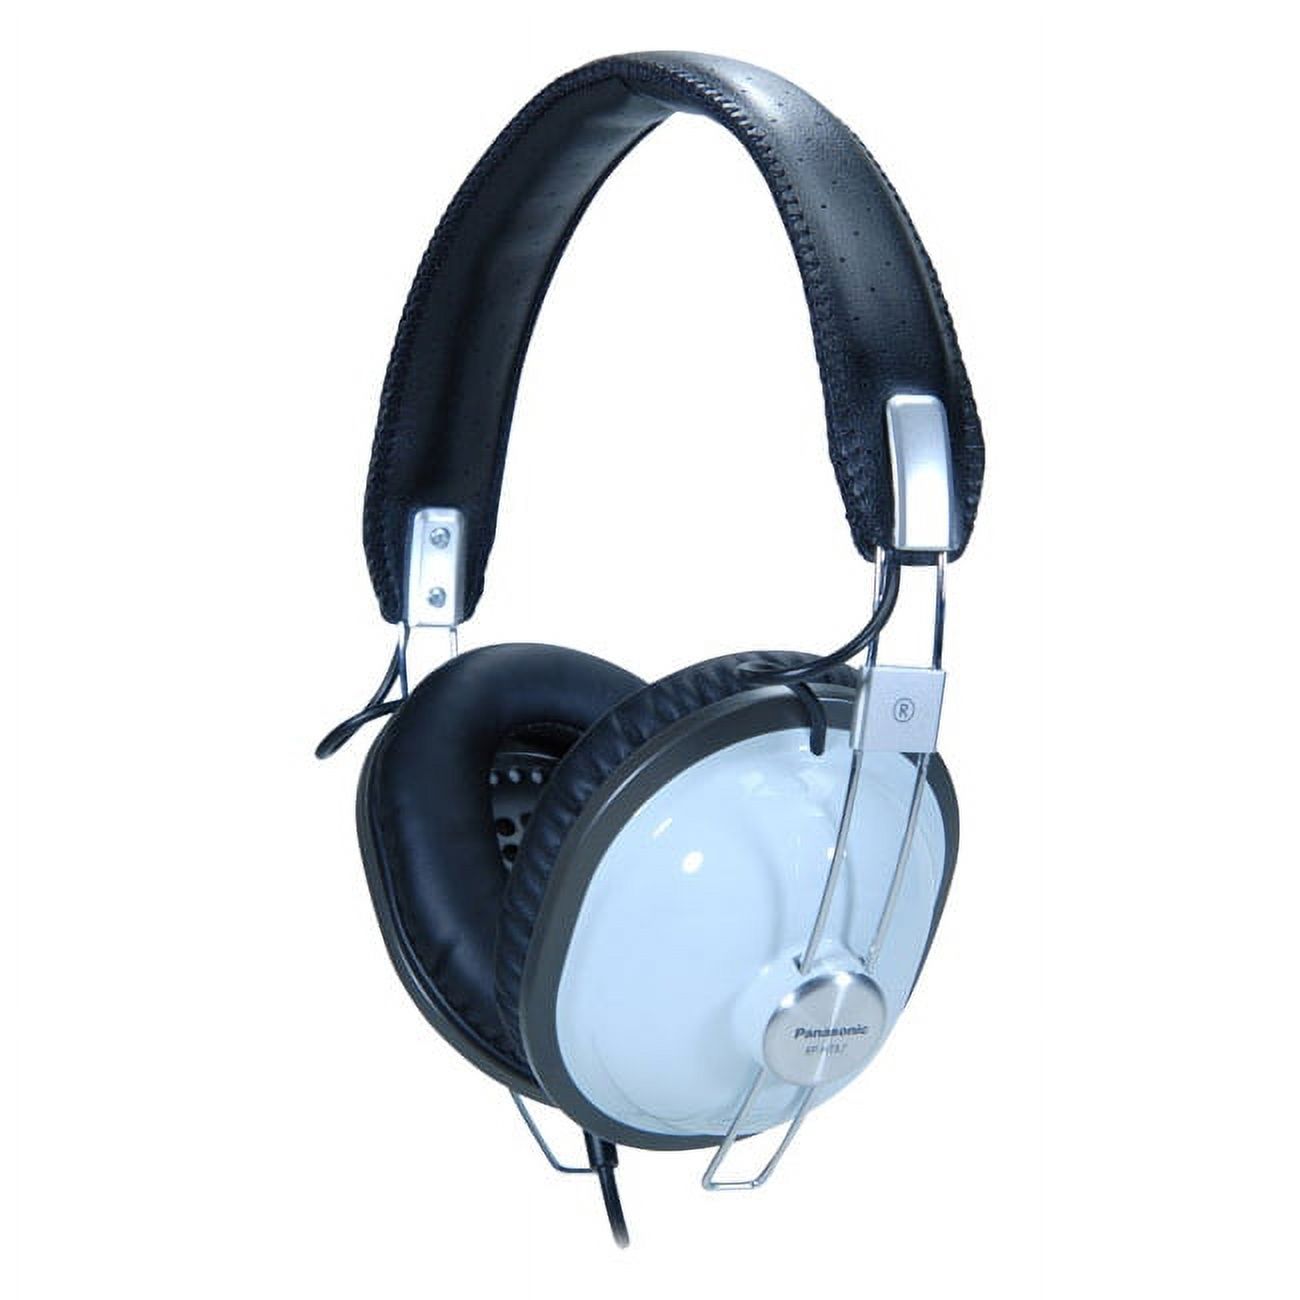 Panasonic Over-Ear Headphones Black, RP-HTX7-A1 - image 2 of 2